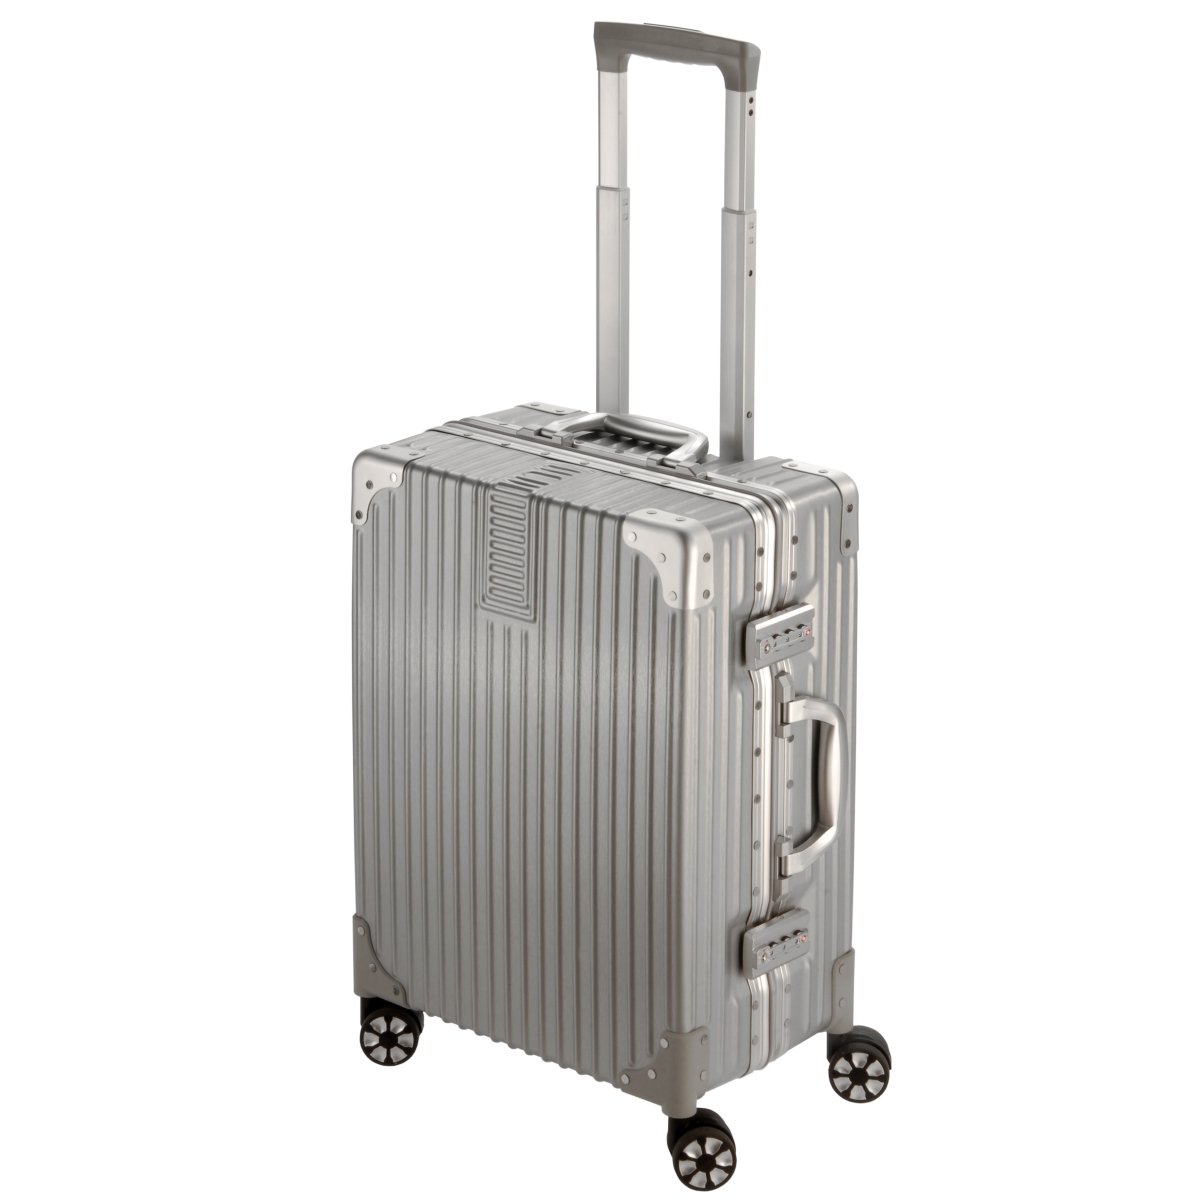 Bd40-6018sl-20 20 In. Abs Hard-side 360 Deg Spinner Luggage, Silver